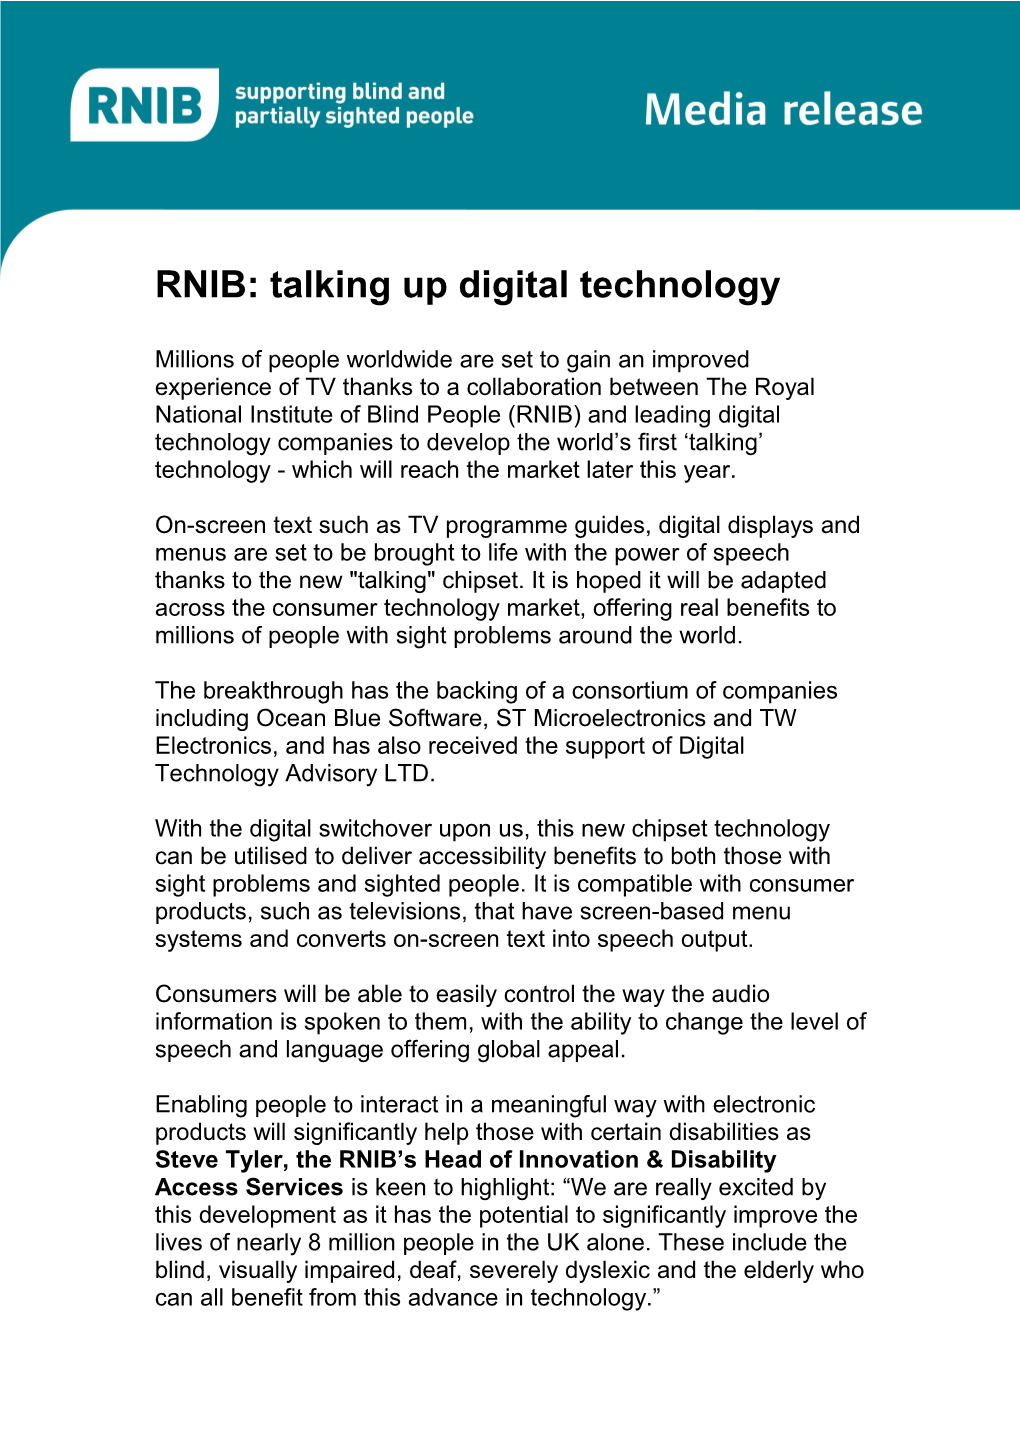 RNIB: Talking up Digital Technology